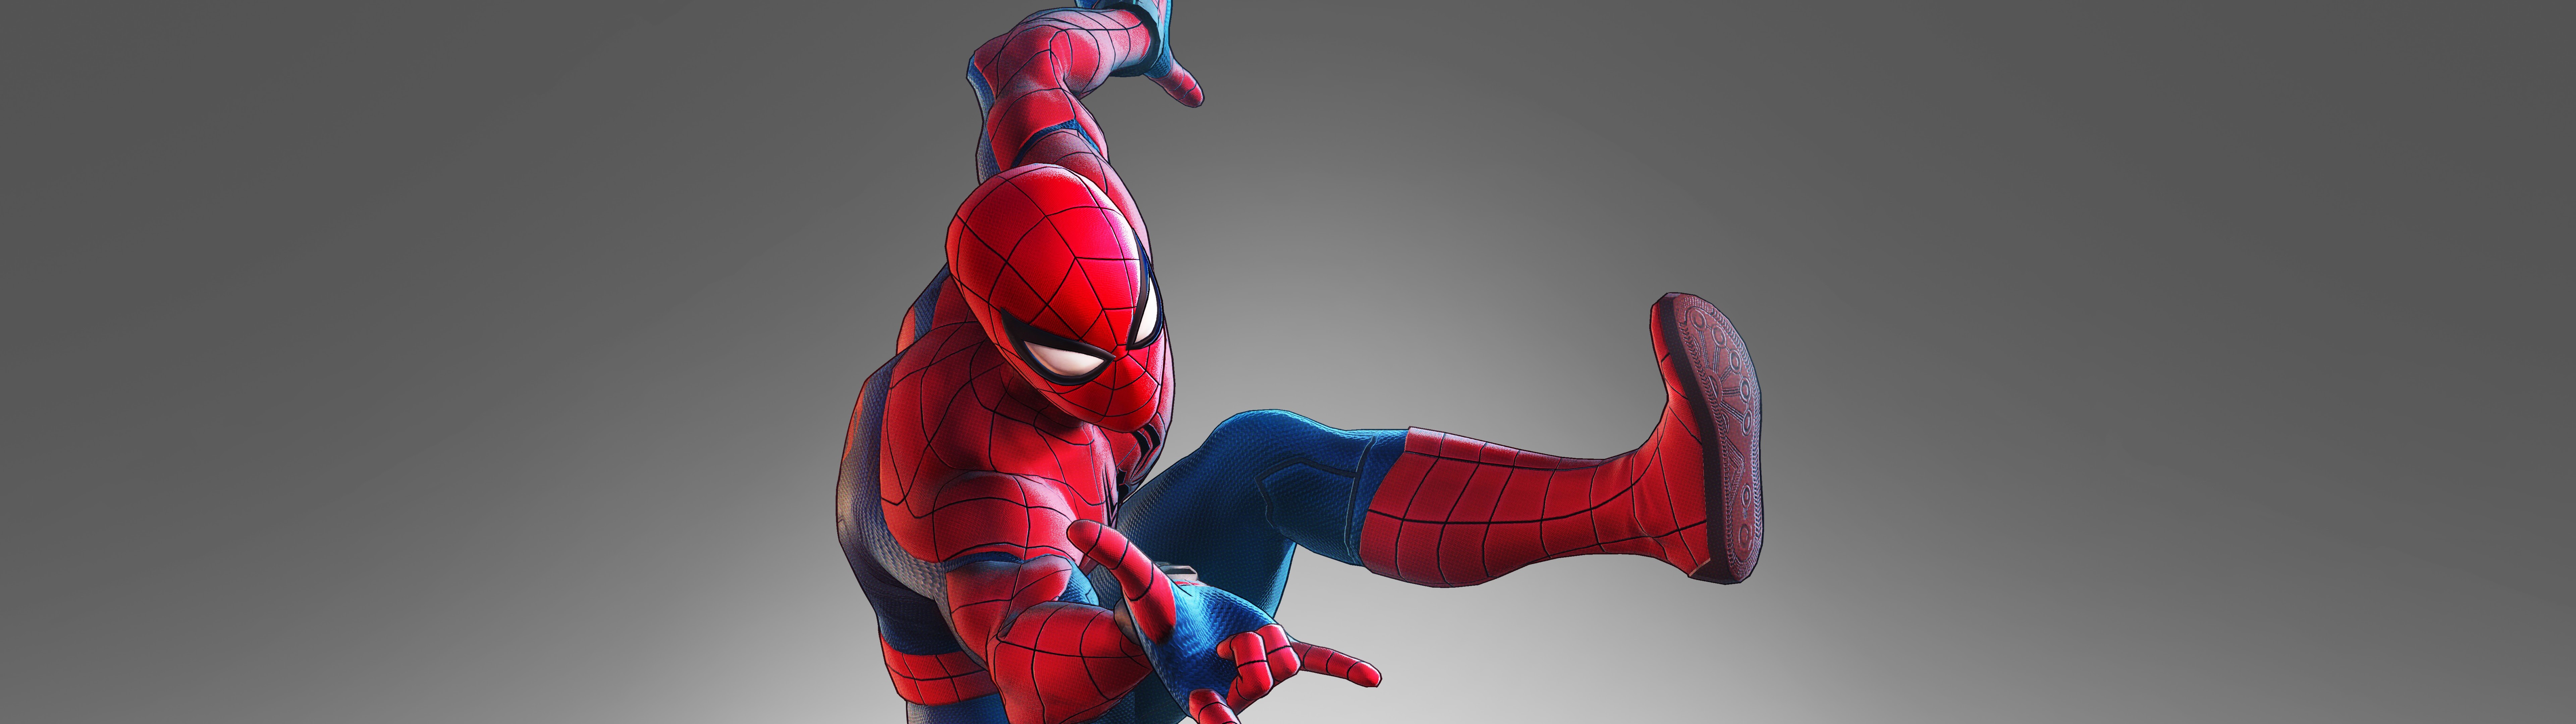 Spider Man Marvel Ultimate Alliance 3 8K Wallpaper